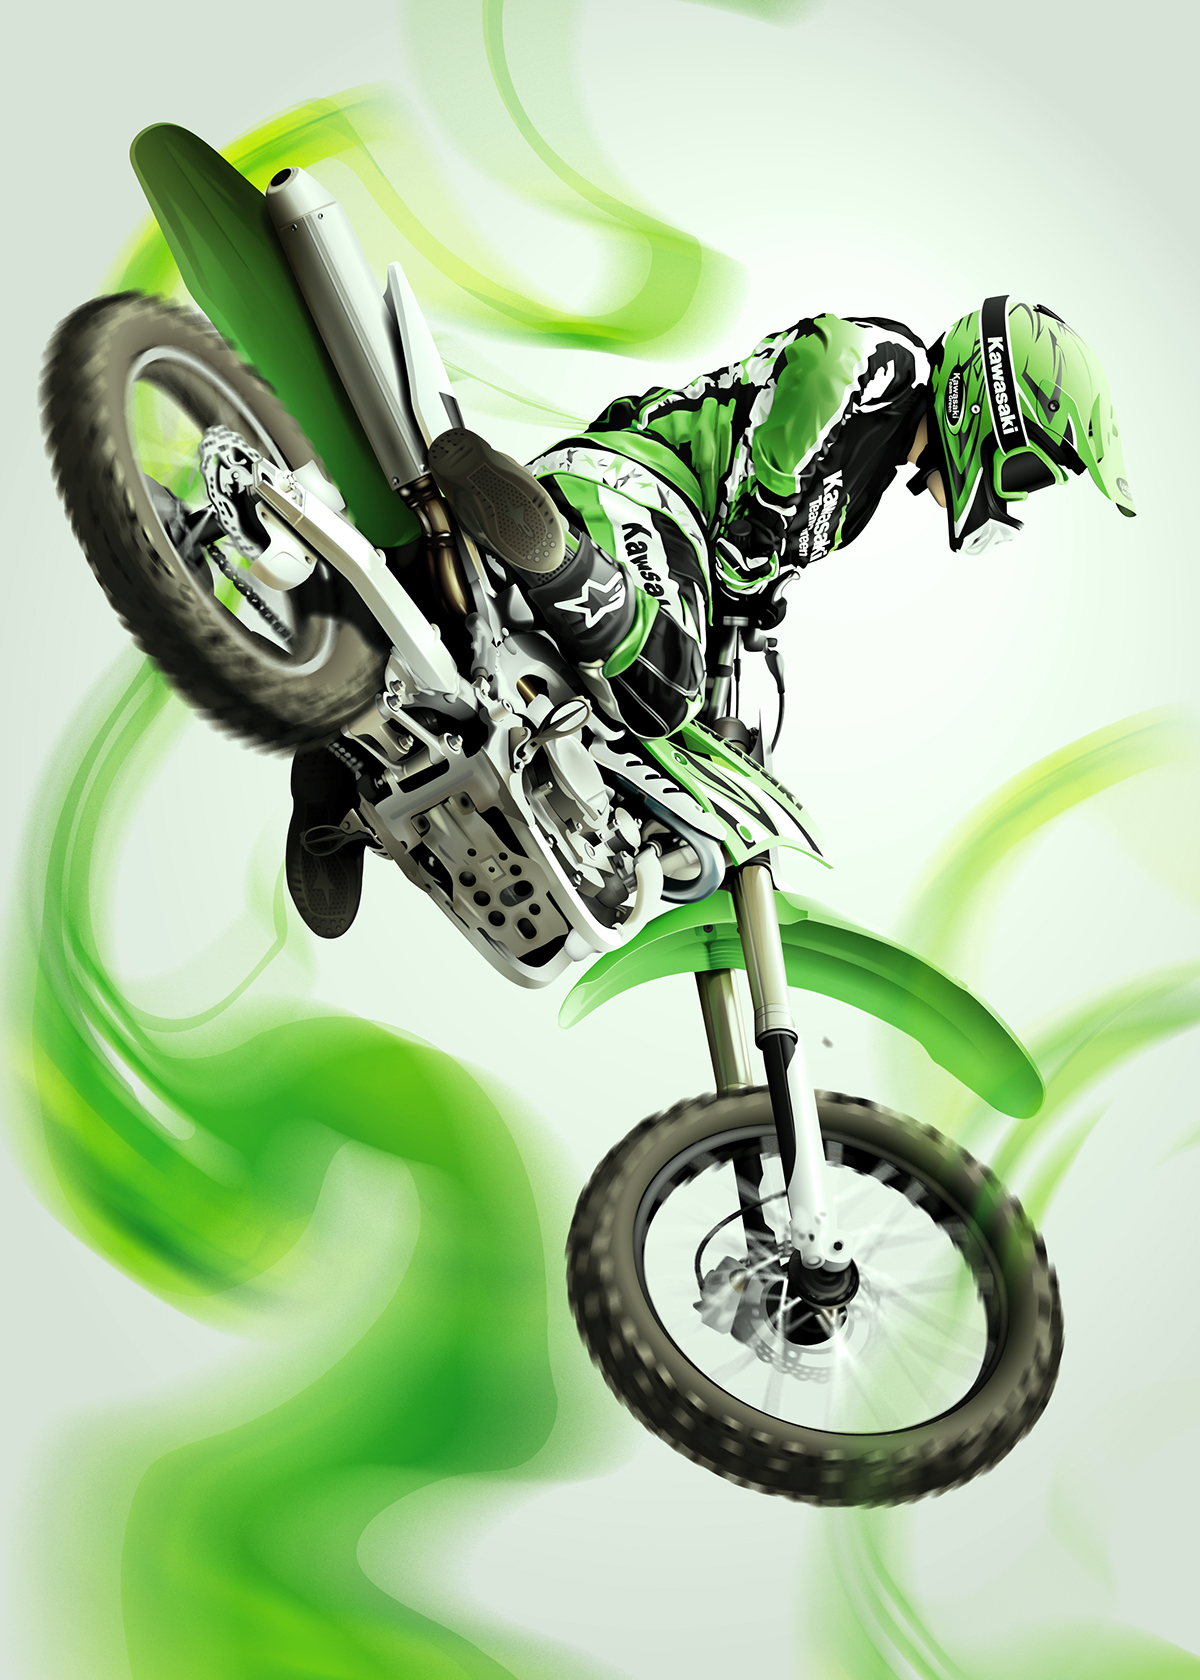 moto Kawasaki green Illustrator Vectorial Motocross